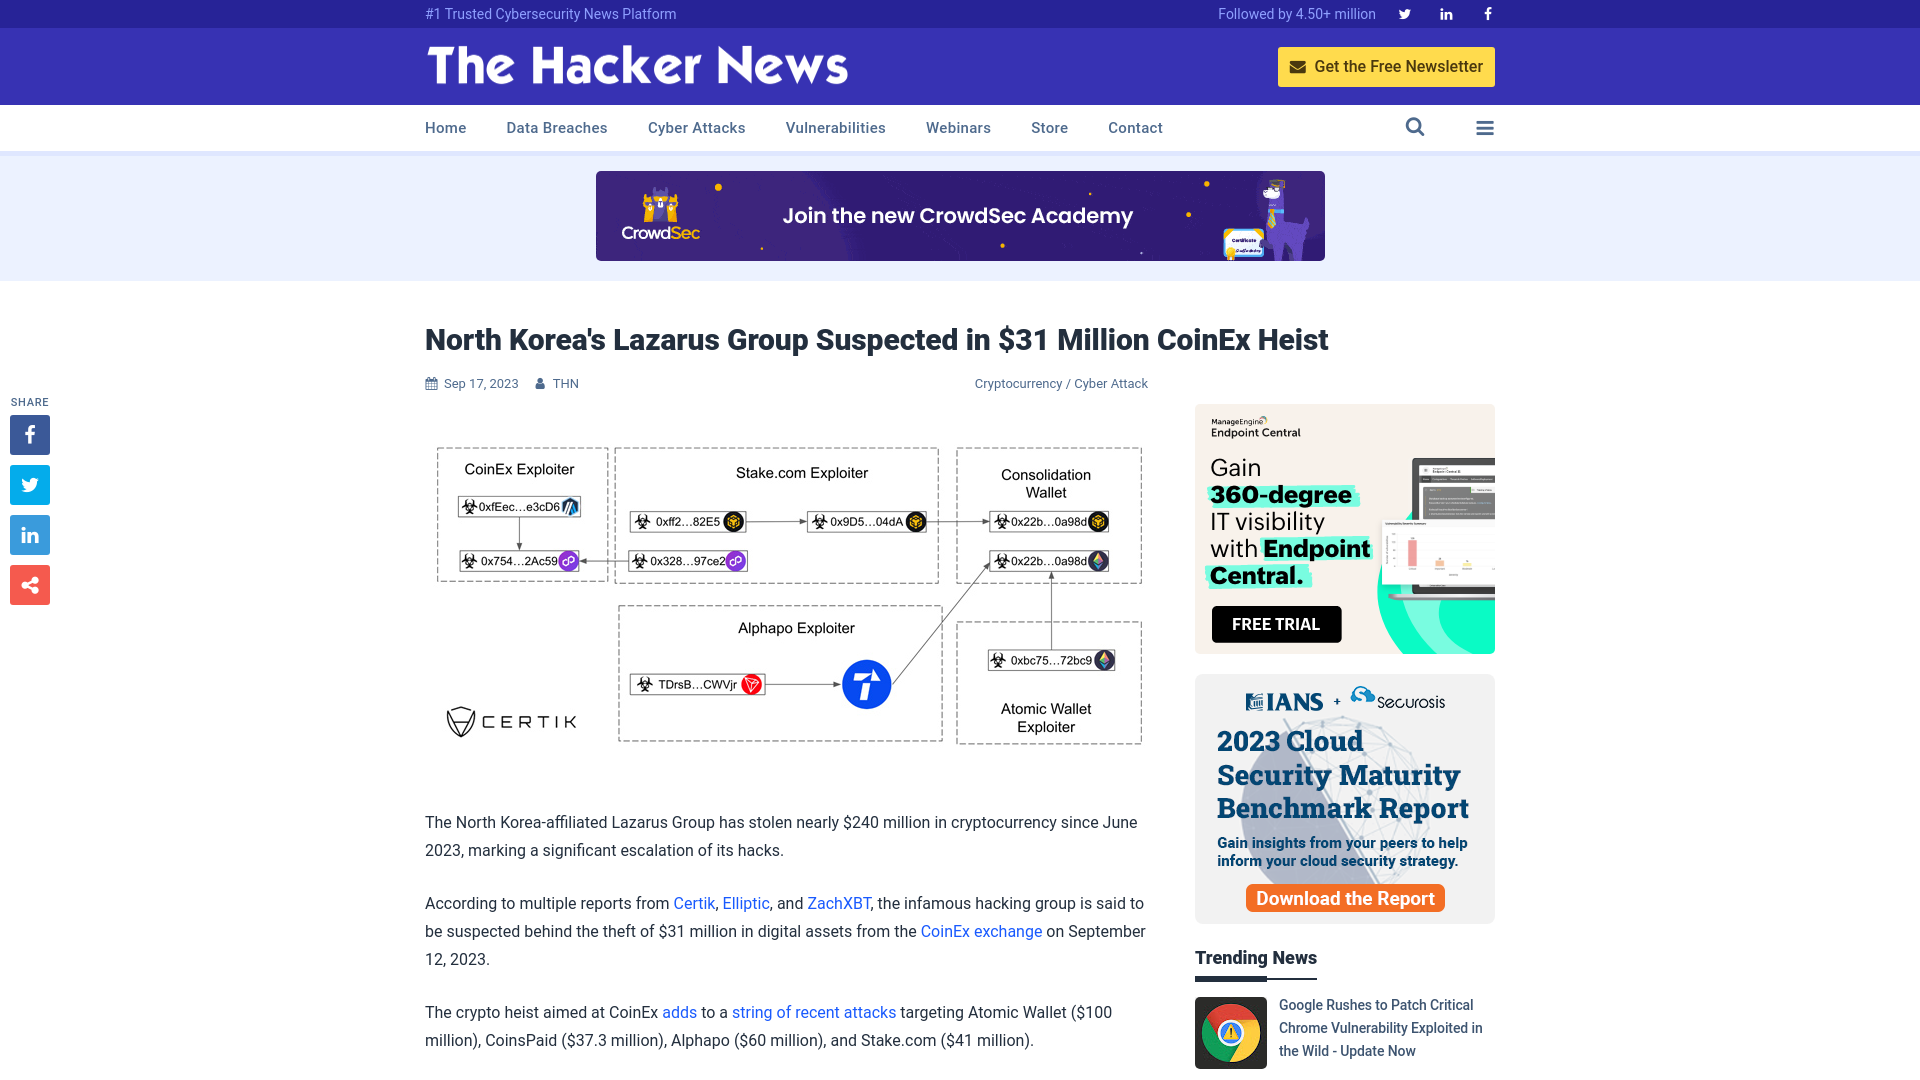 North Korea's Lazarus Group Suspected in $31 Million CoinEx Heist